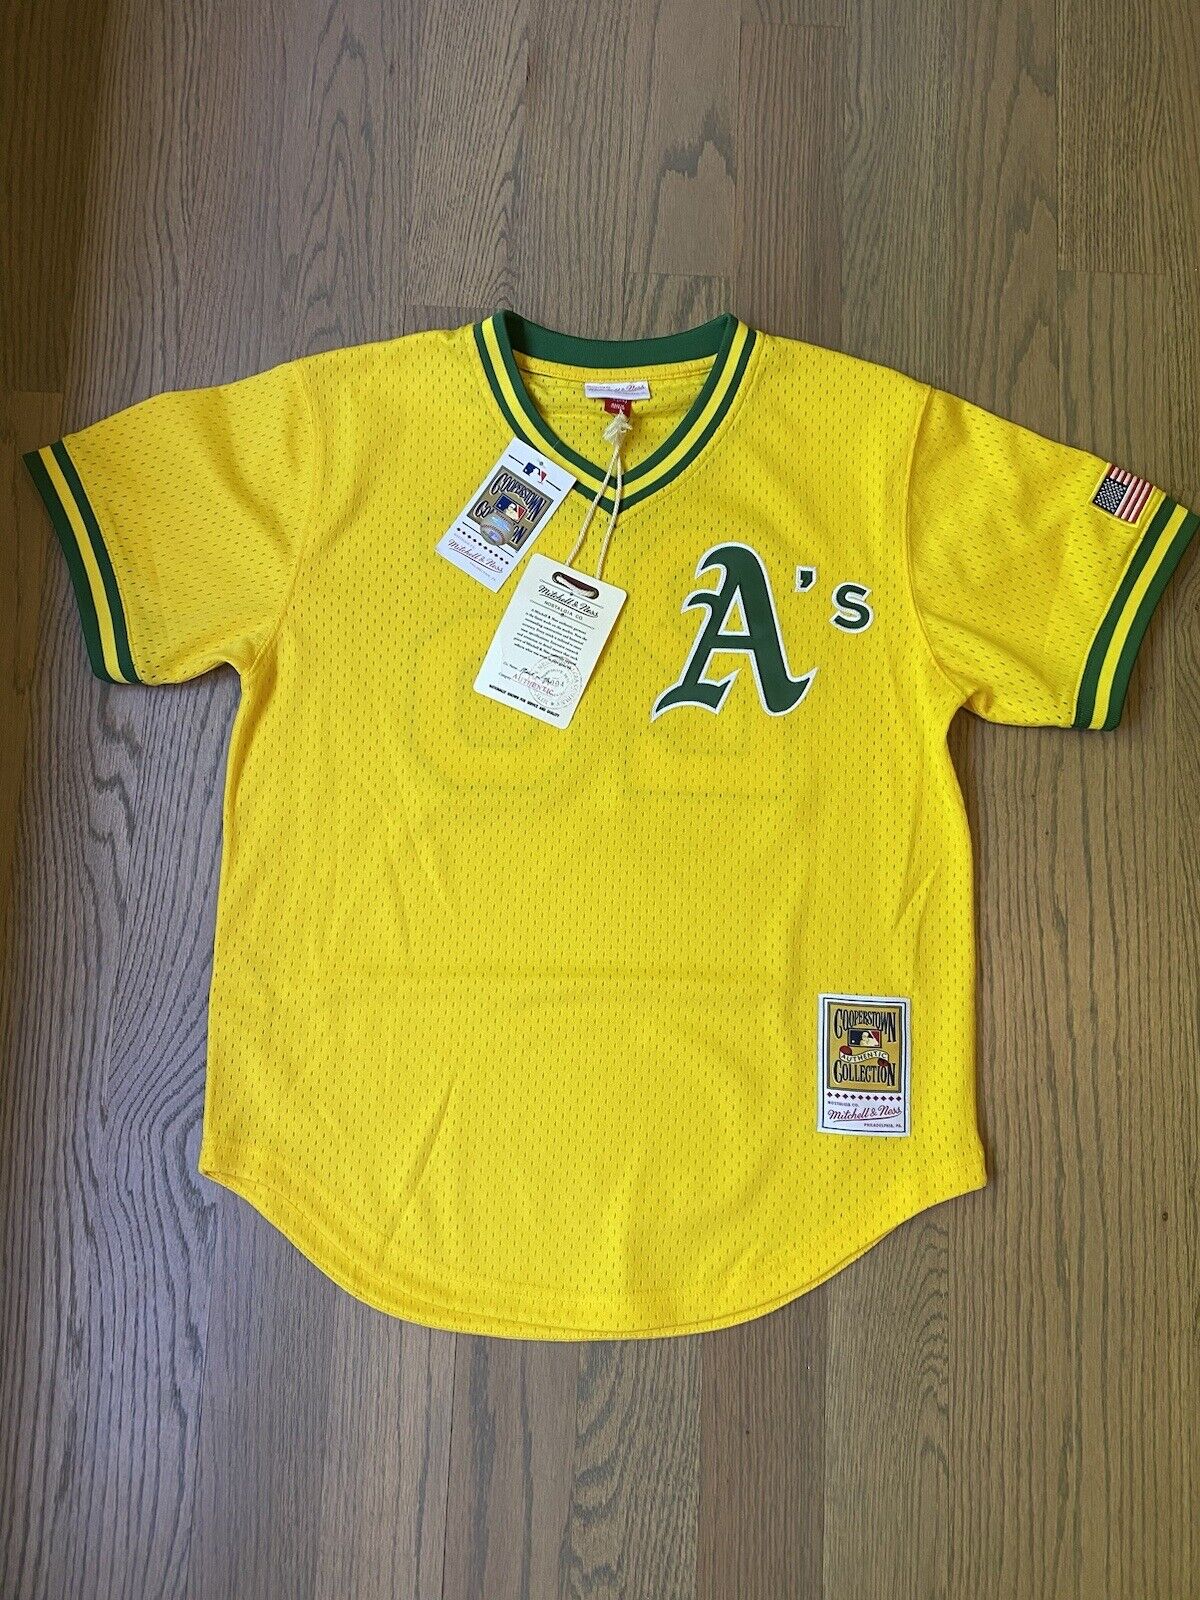 NWT Mitchell & Ness Oakland Athletics BP jersey - 1990 Mark McGwire -Size 40 (M)